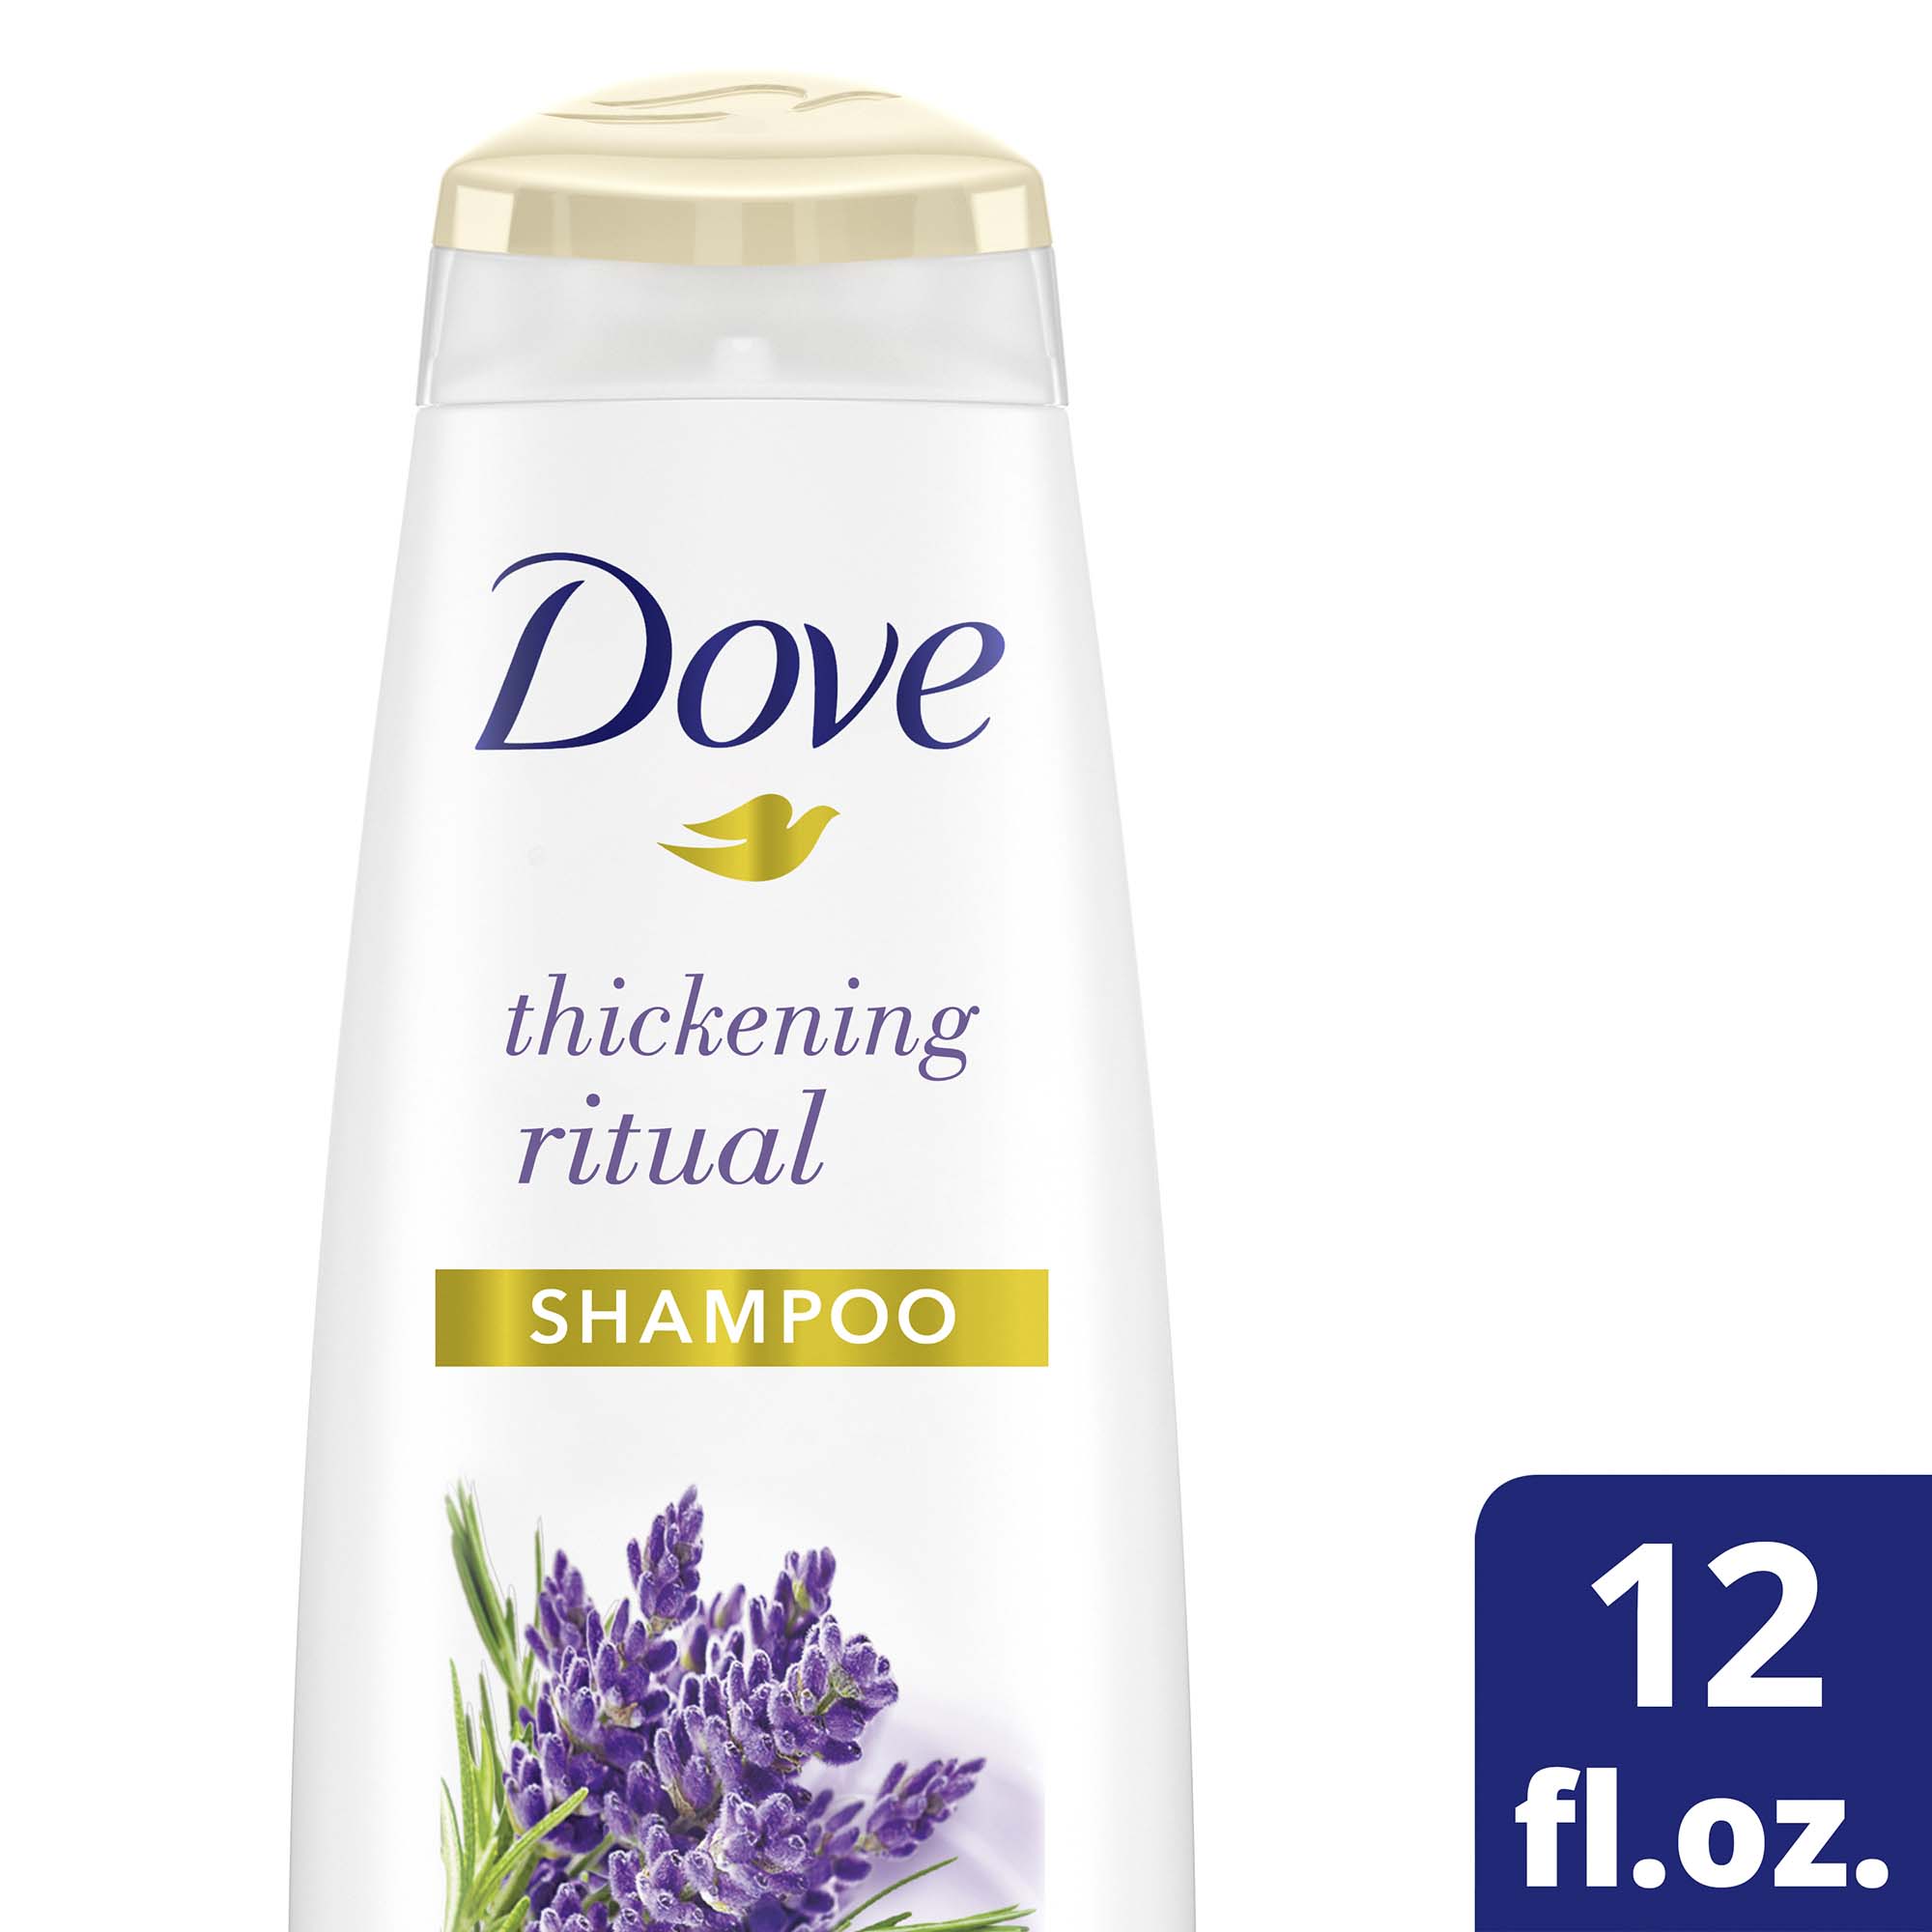 Dove Volume Shampoo Thickening Ritual 12 oz - image 8 of 16